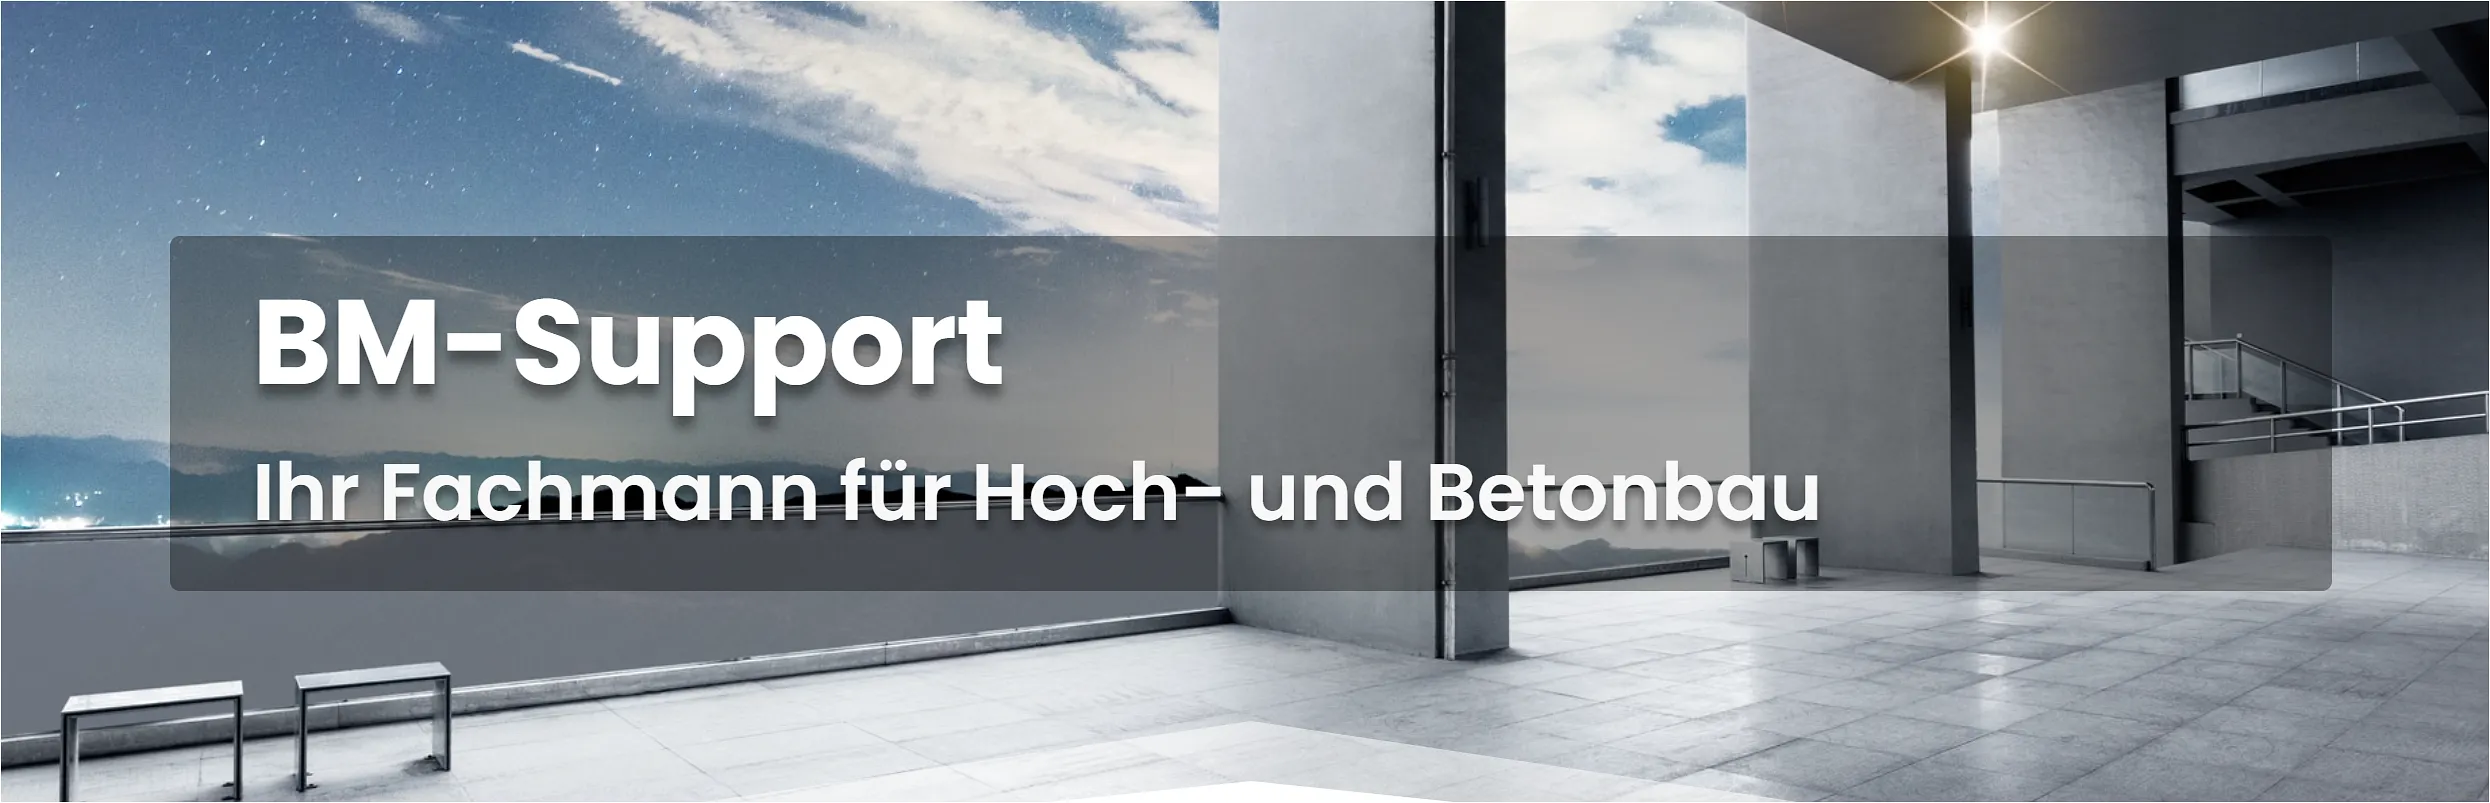 BM-Support GmbH